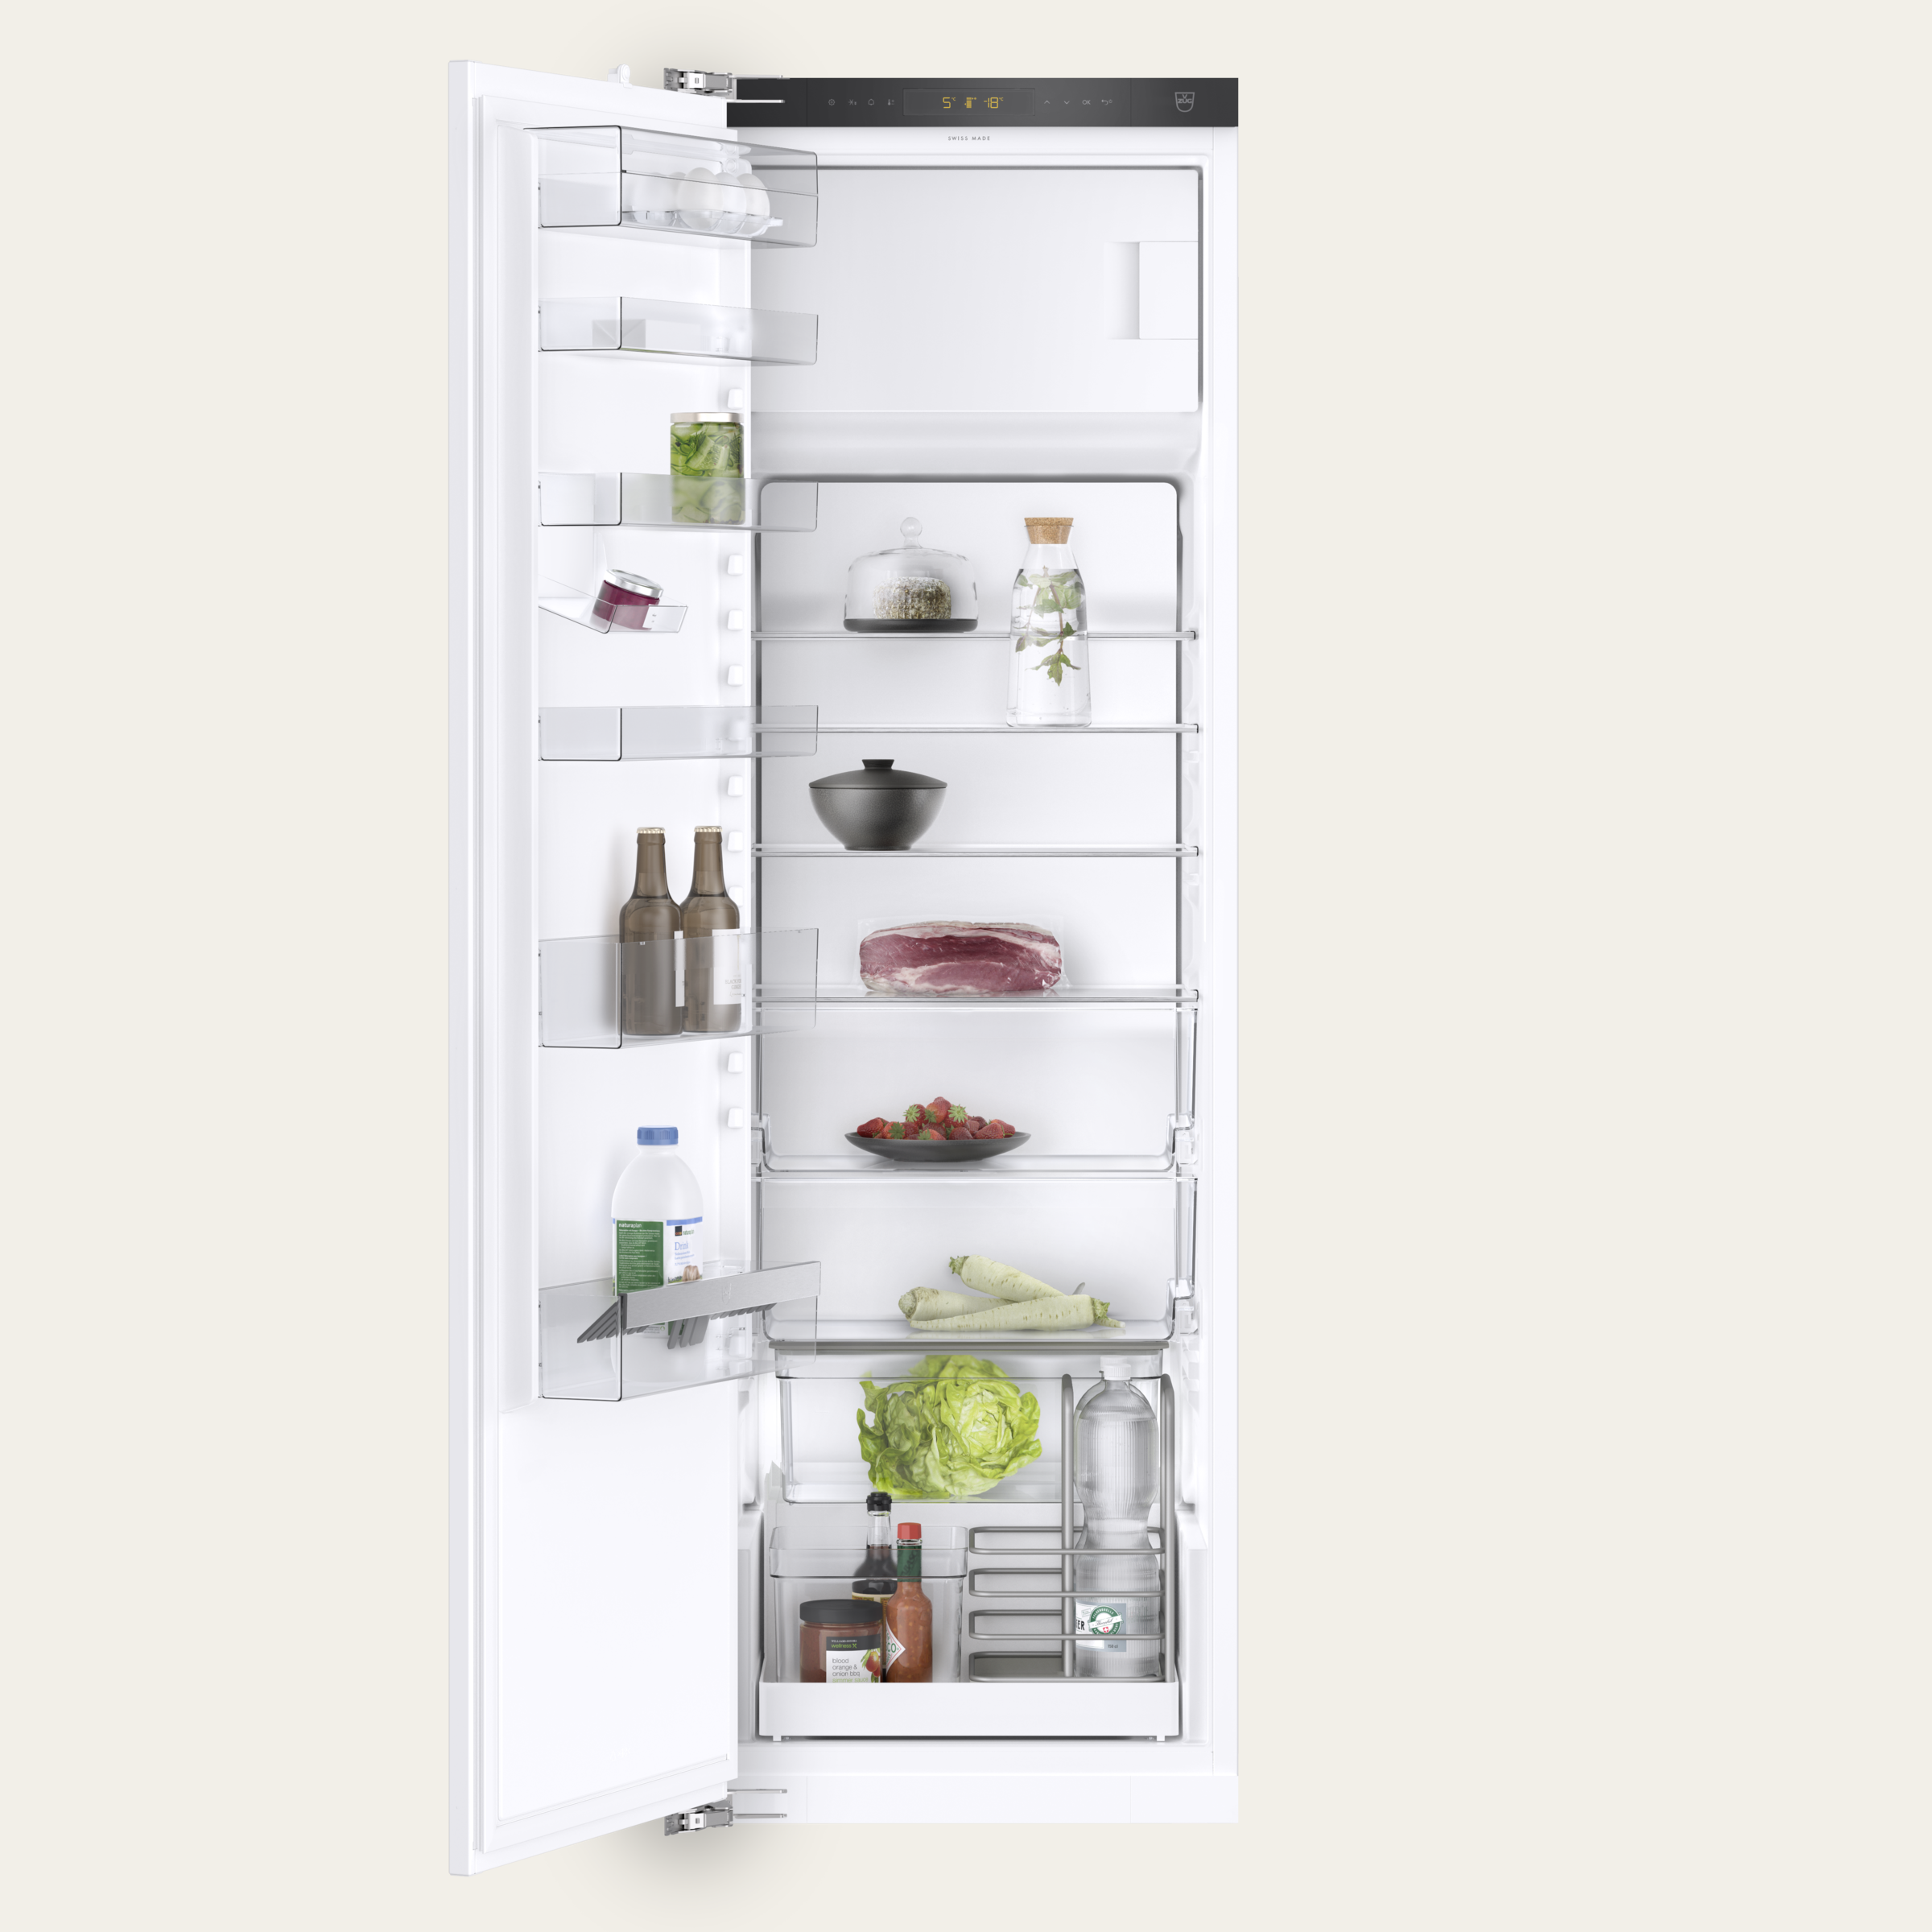 V-ZUG Refrigerator/freezer Cooler V2000 178FGI, Standard width: 60 cm, Standard height: 177.8 cm, Fully integratable, Door hinge: Left, Energy efficiency class: D, TouchControl